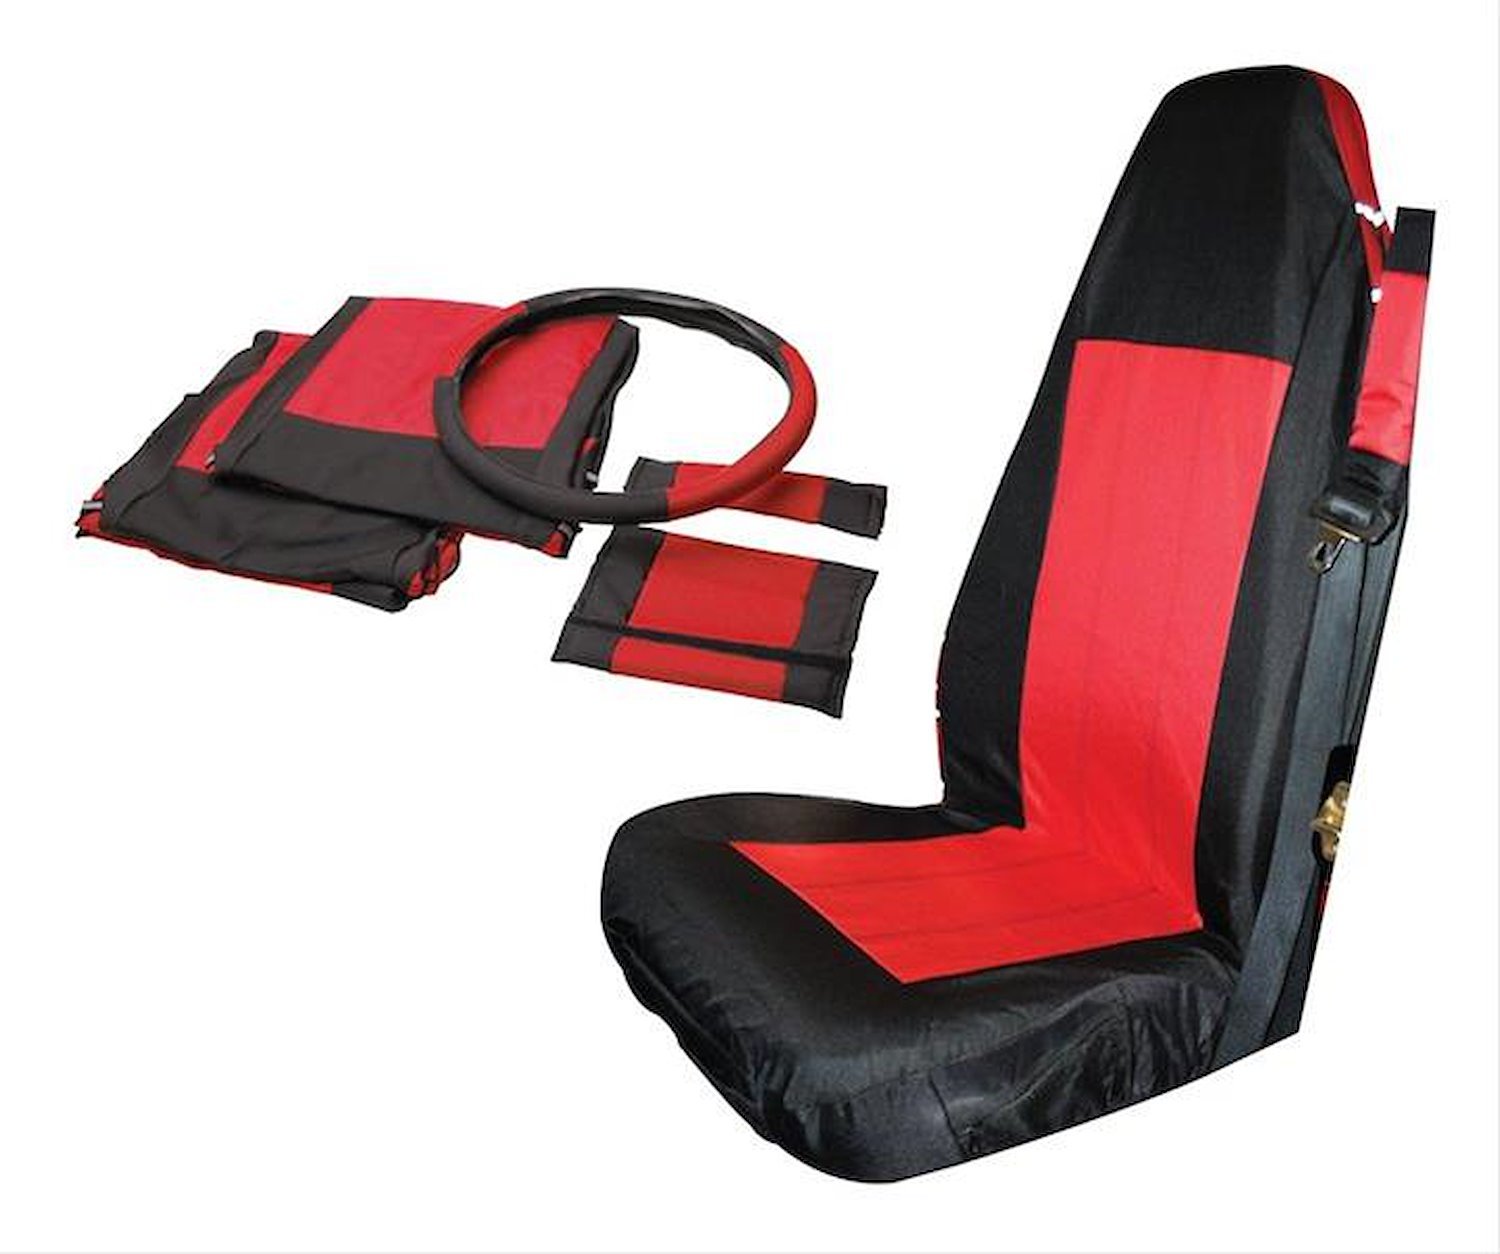 SC10030 Seat Cover Set